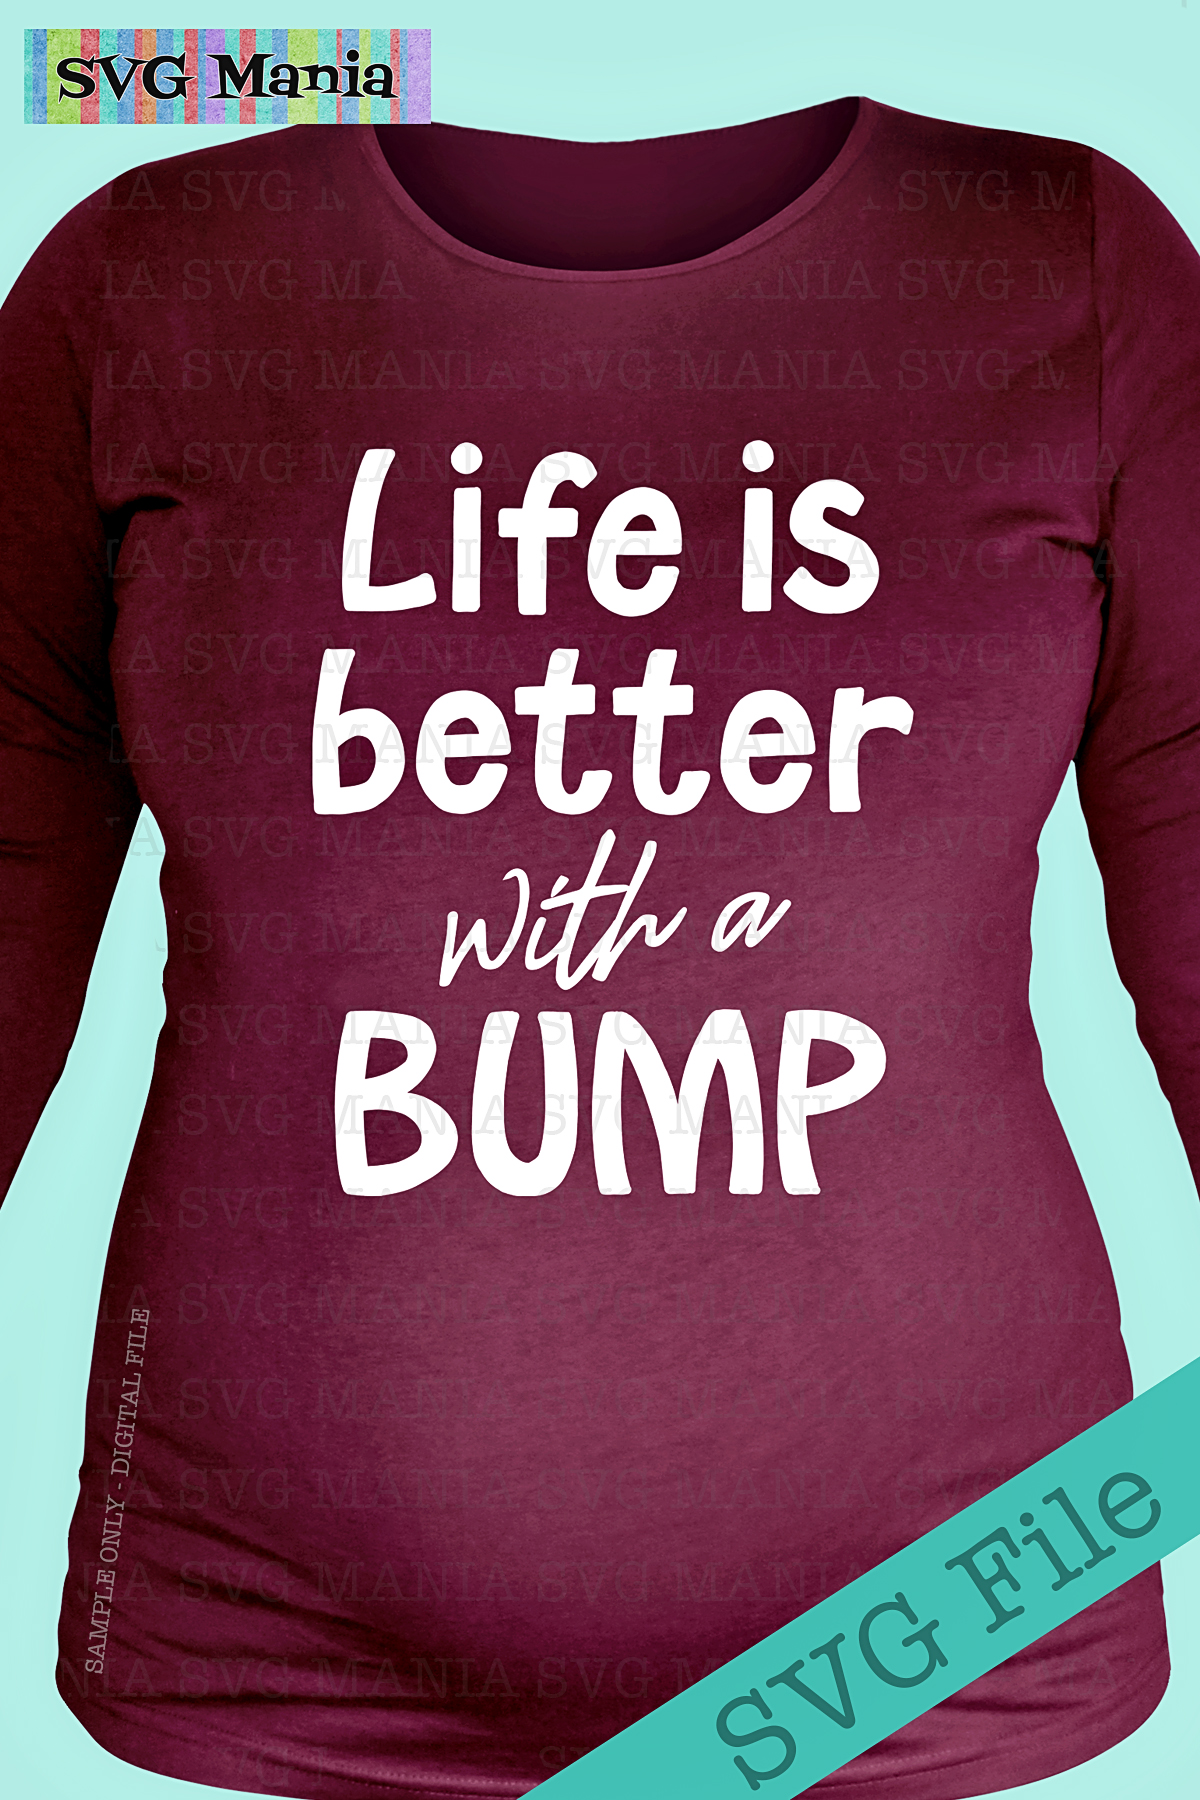 Funny Maternity Shirt SVG File, Pregnancy SVG Cut File